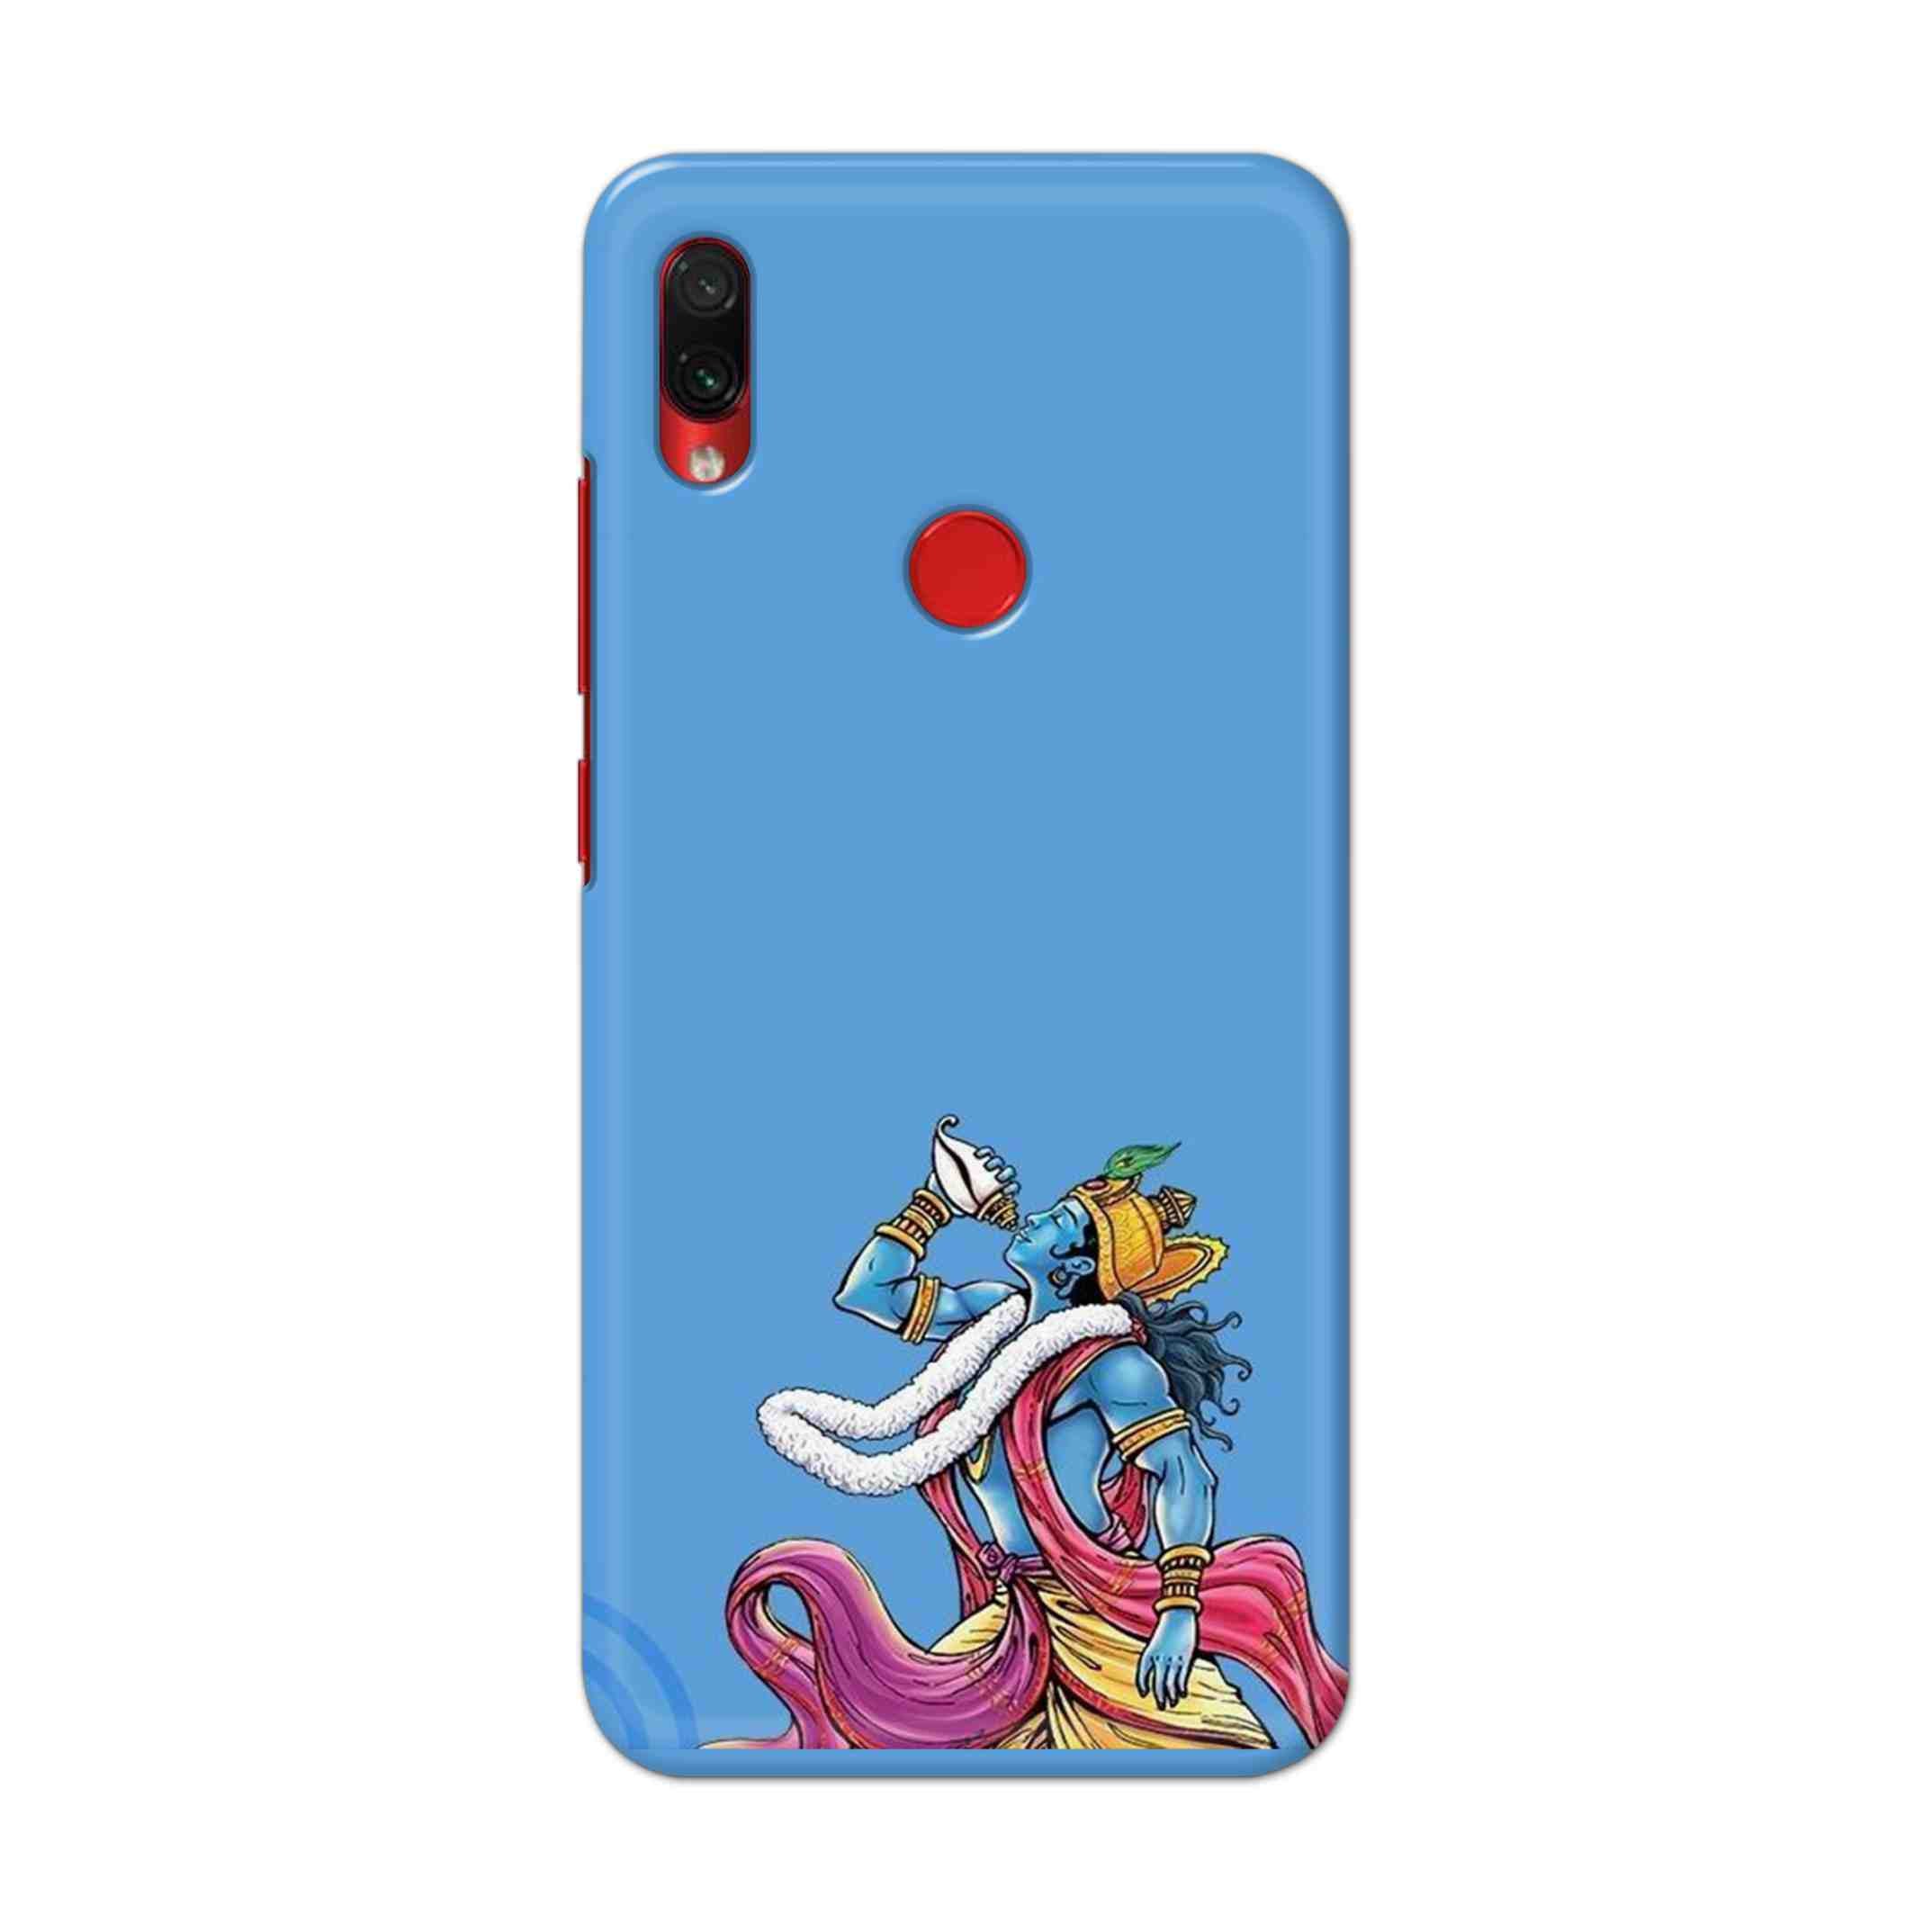 Buy Krishna Hard Back Mobile Phone Case Cover For Xiaomi Redmi Note 7S Online